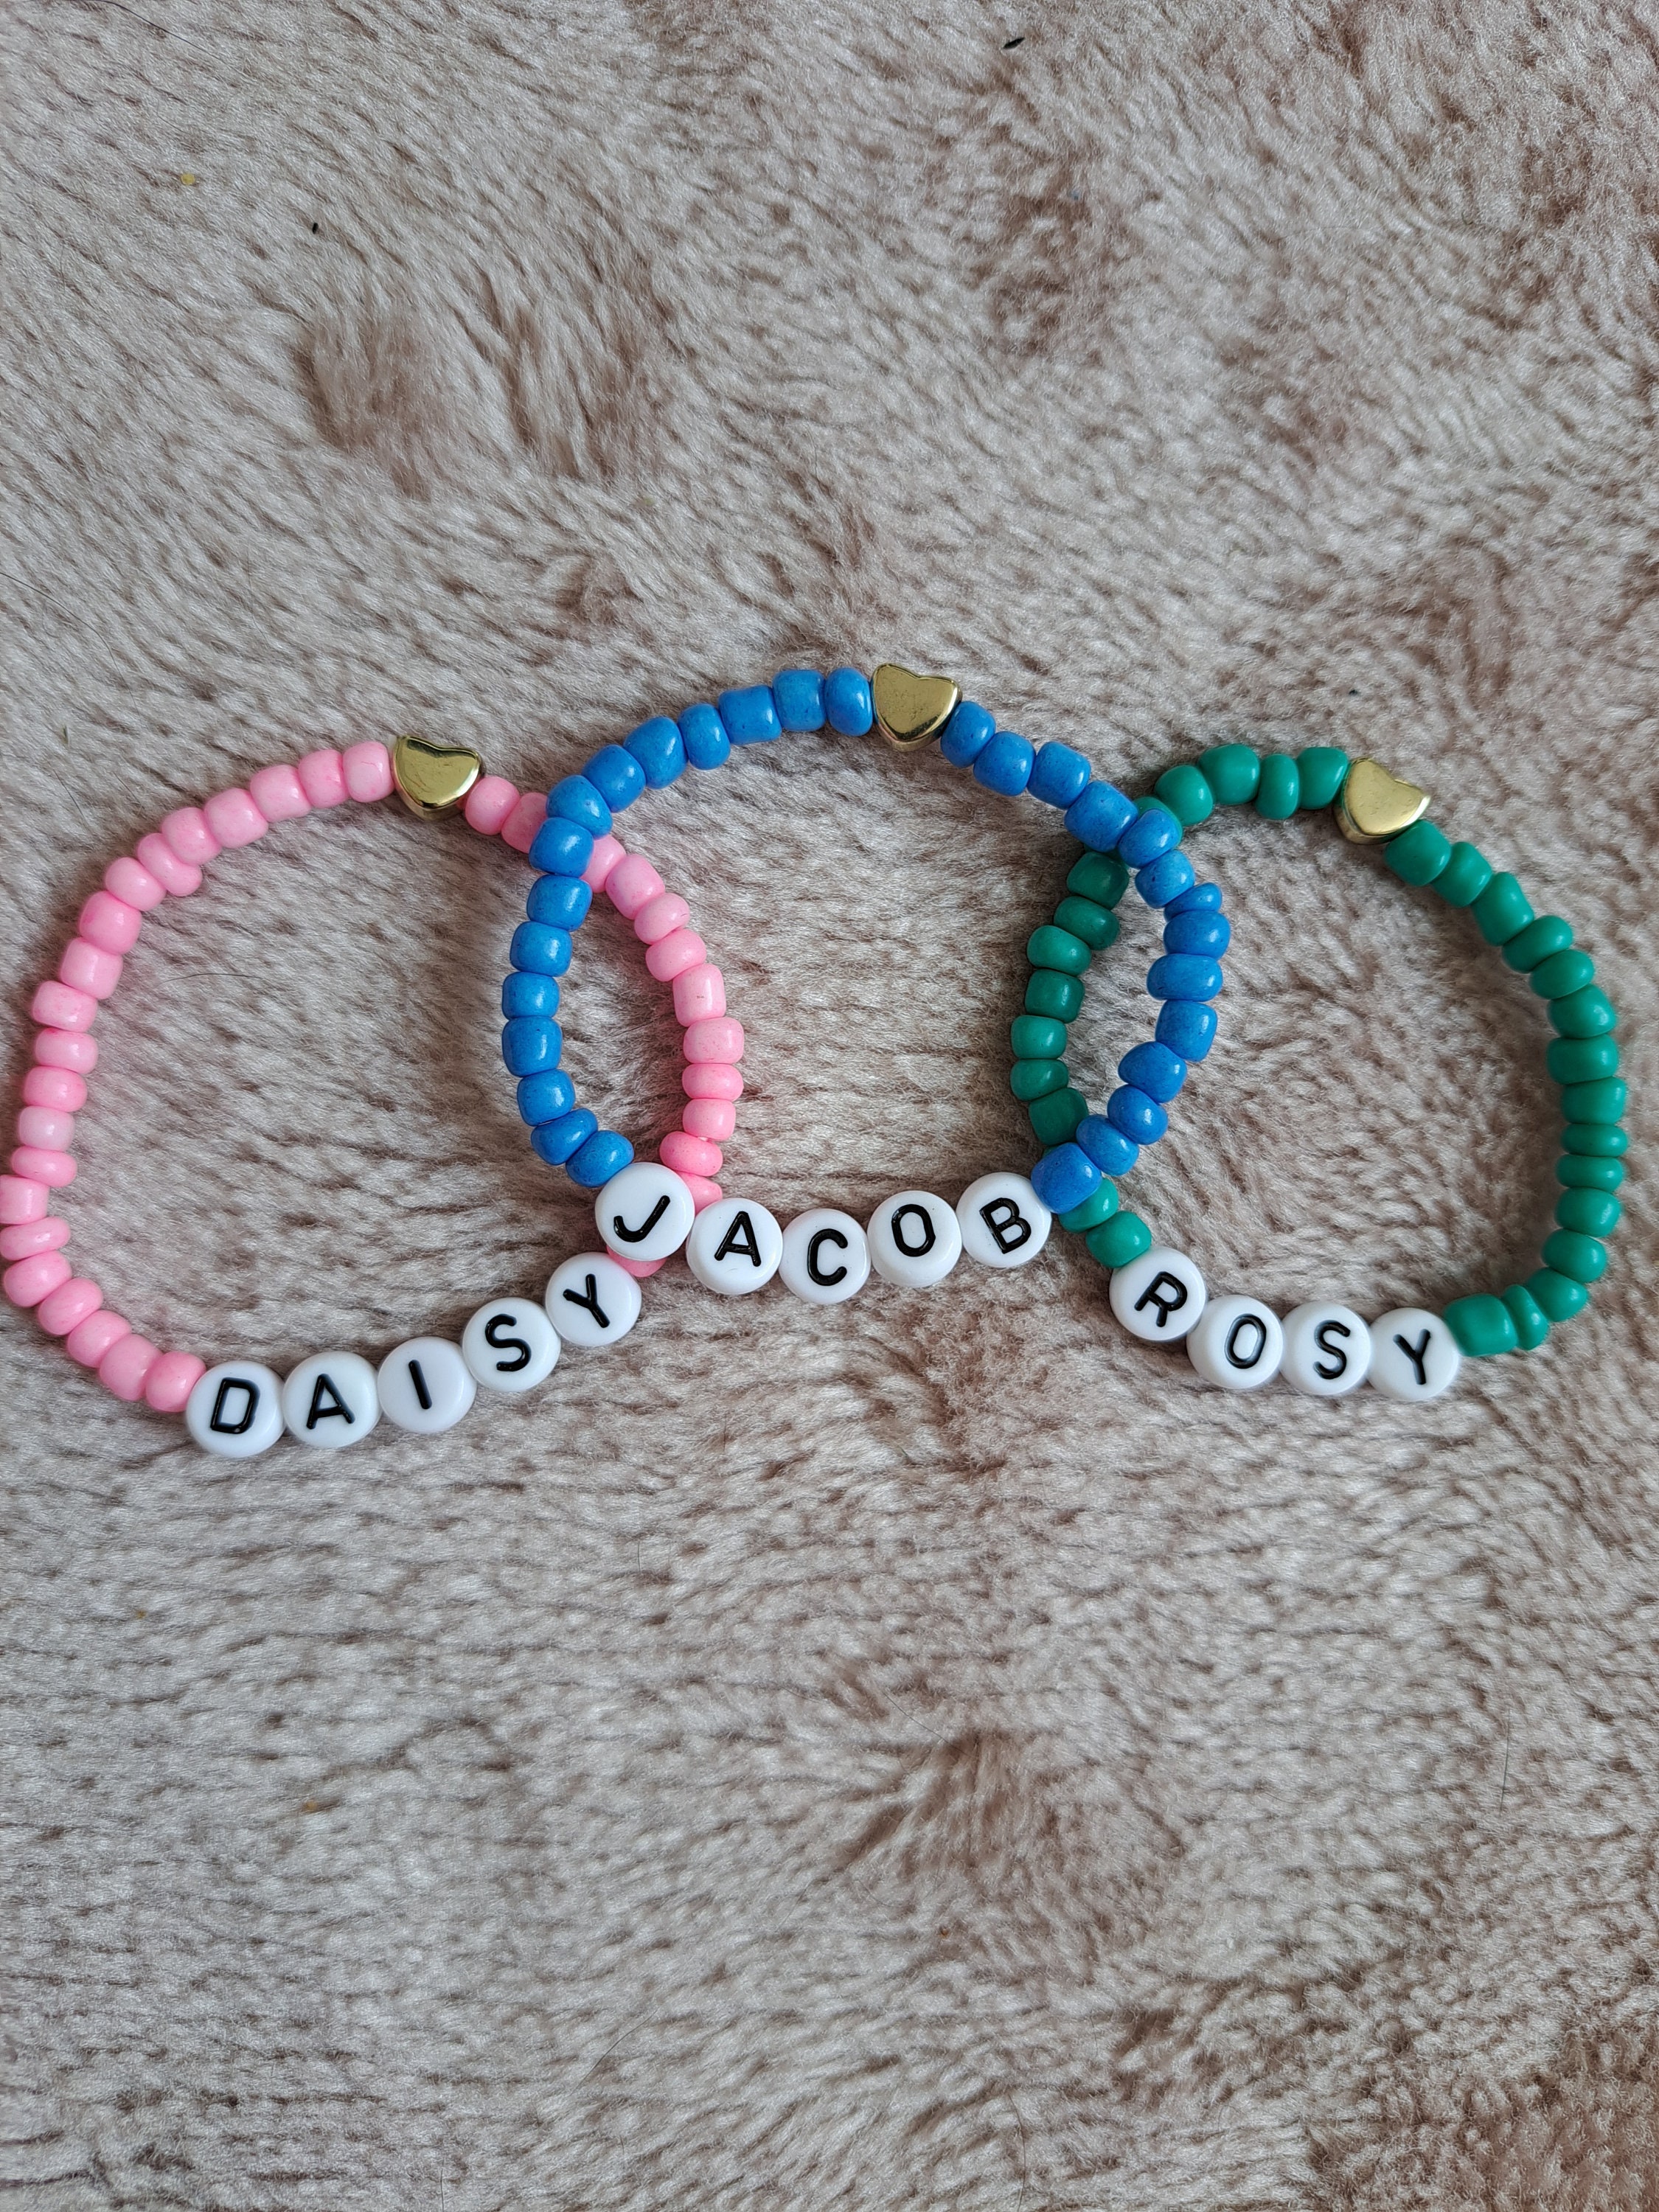 Personalised Beaded Bracelets, Name Bracelet, Beads, Charity